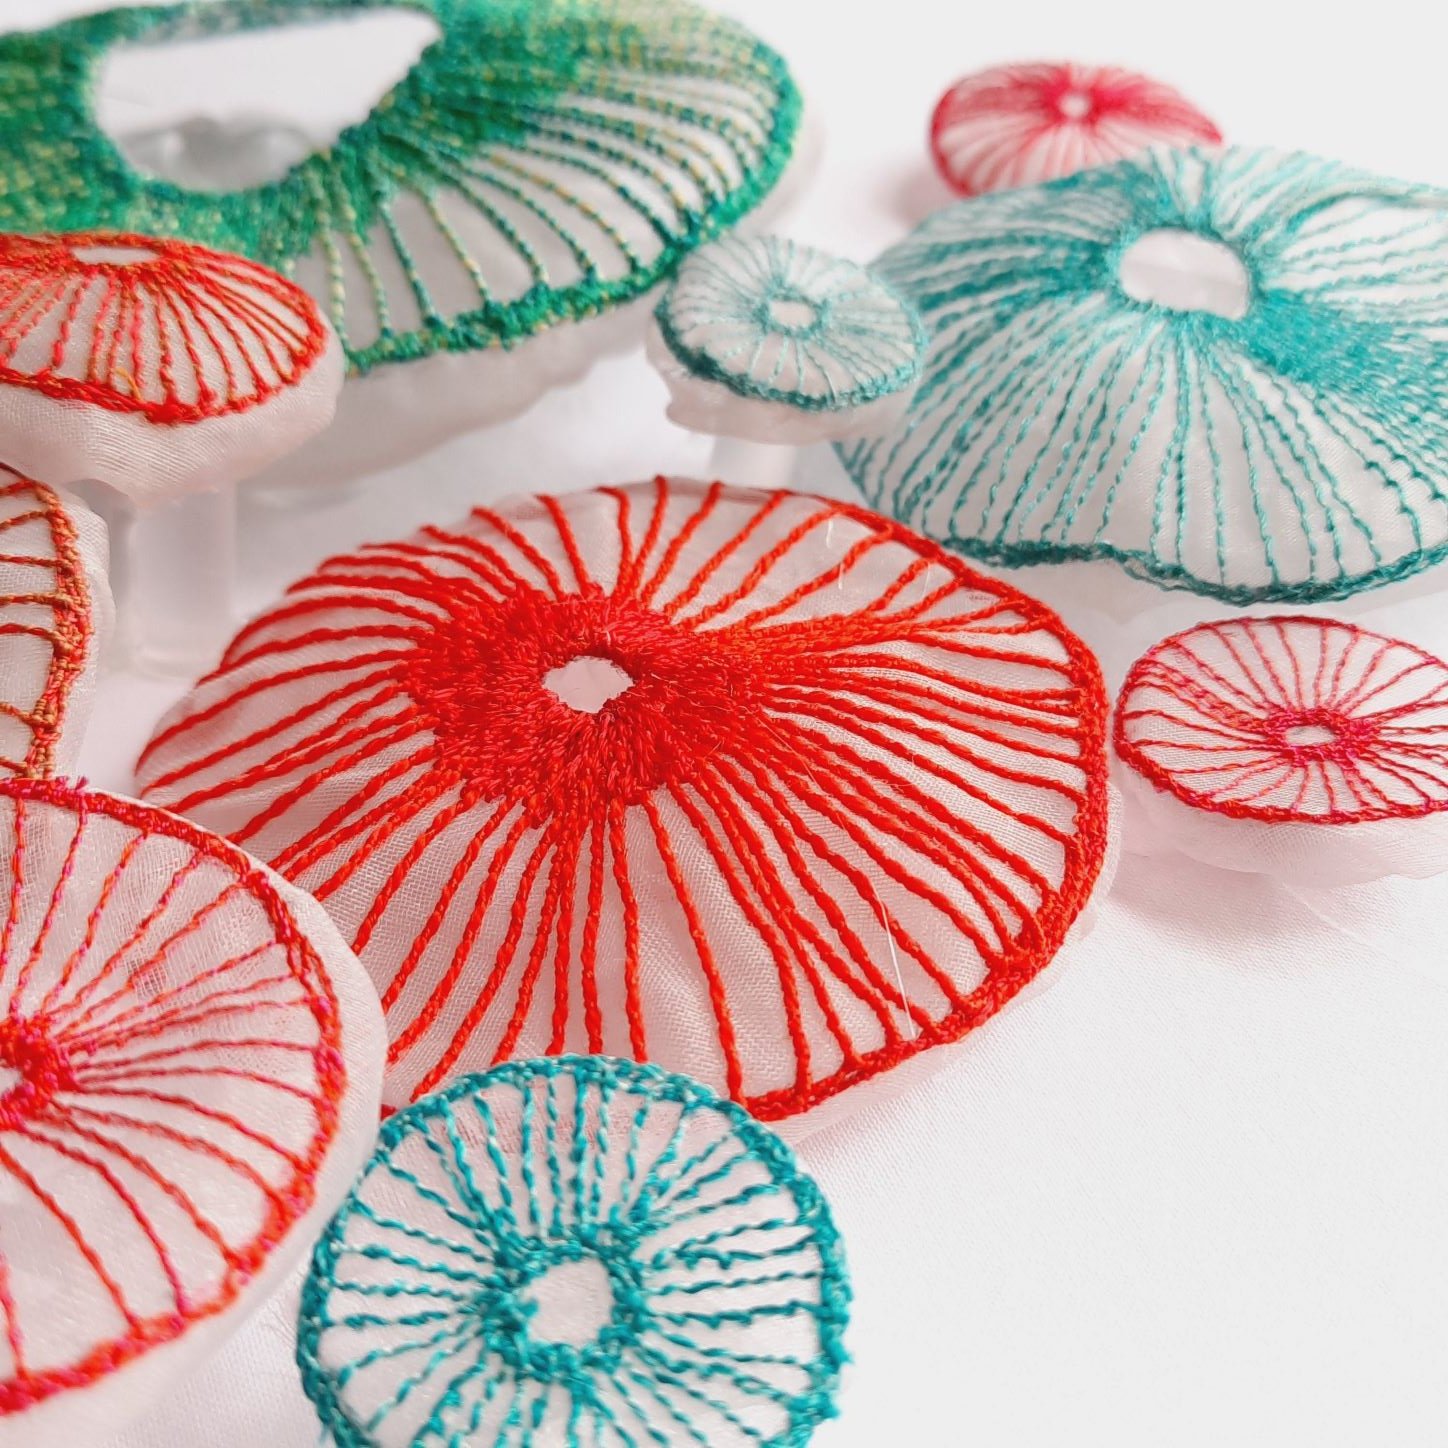 Coral textile art close up |  Agatha Lee 'Agy'